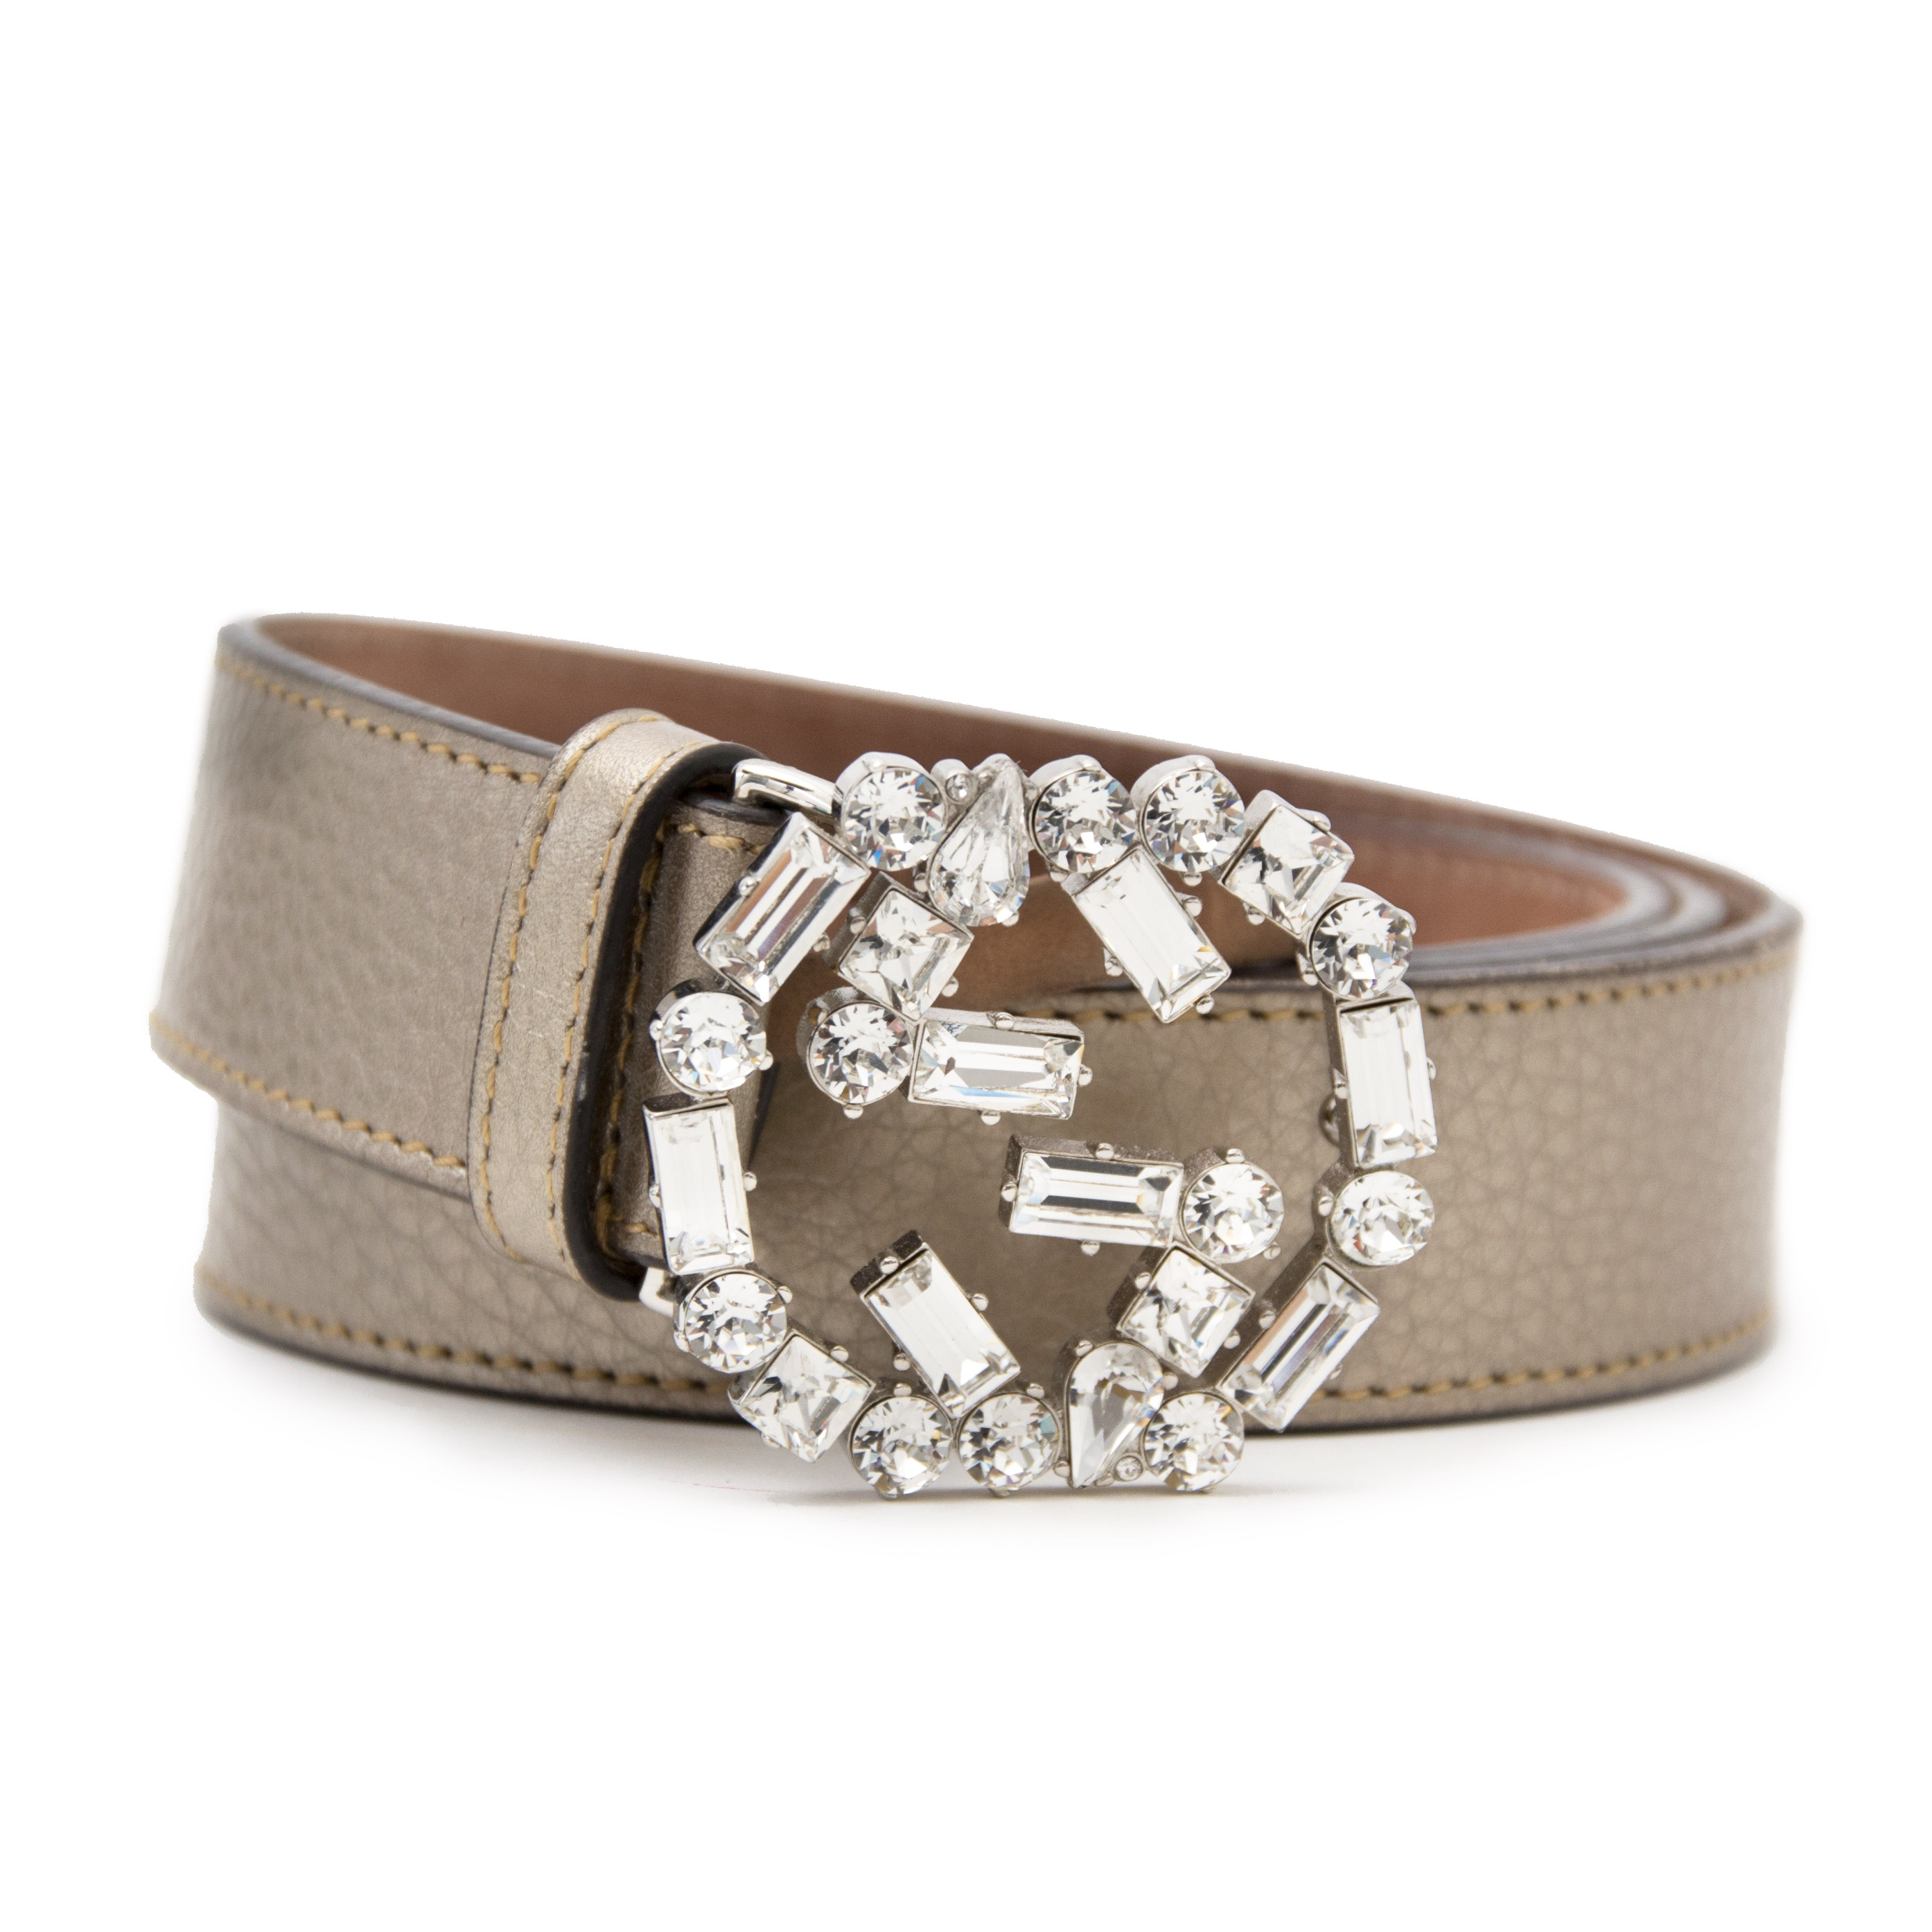 Gucci Diamond Belt Price $256,970  Gucci belt, Accessories, Mens belts